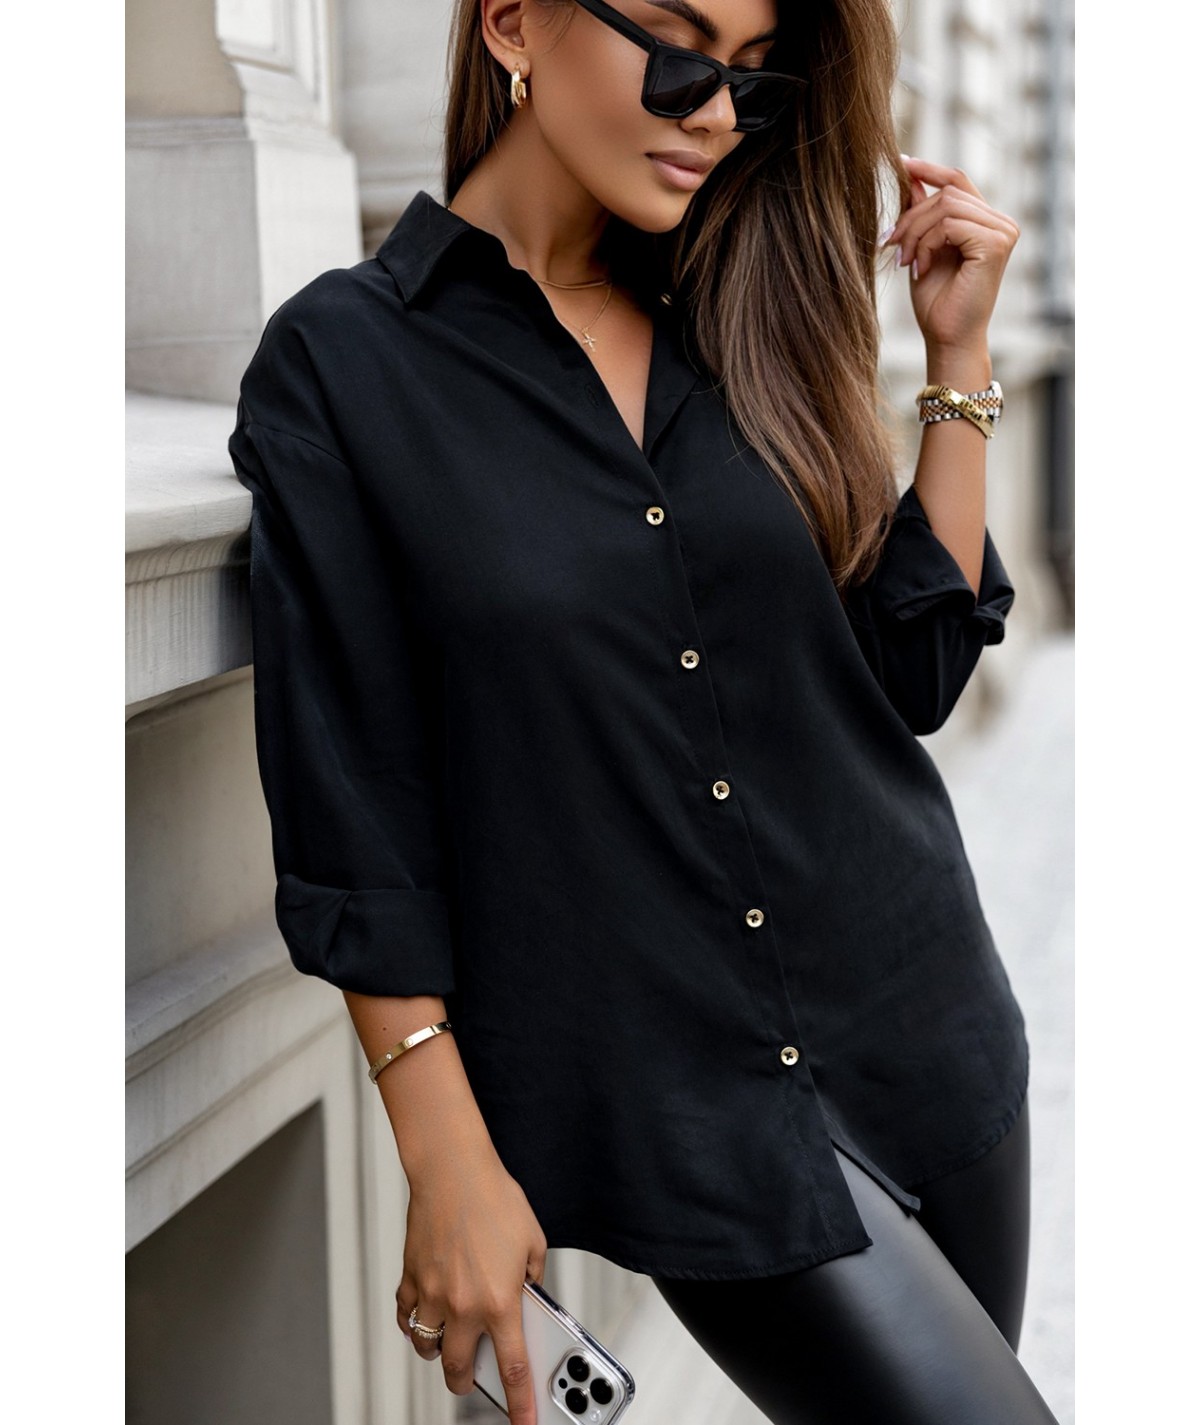 Czarna koszula damska z mankietem. Eleganckie koszule online